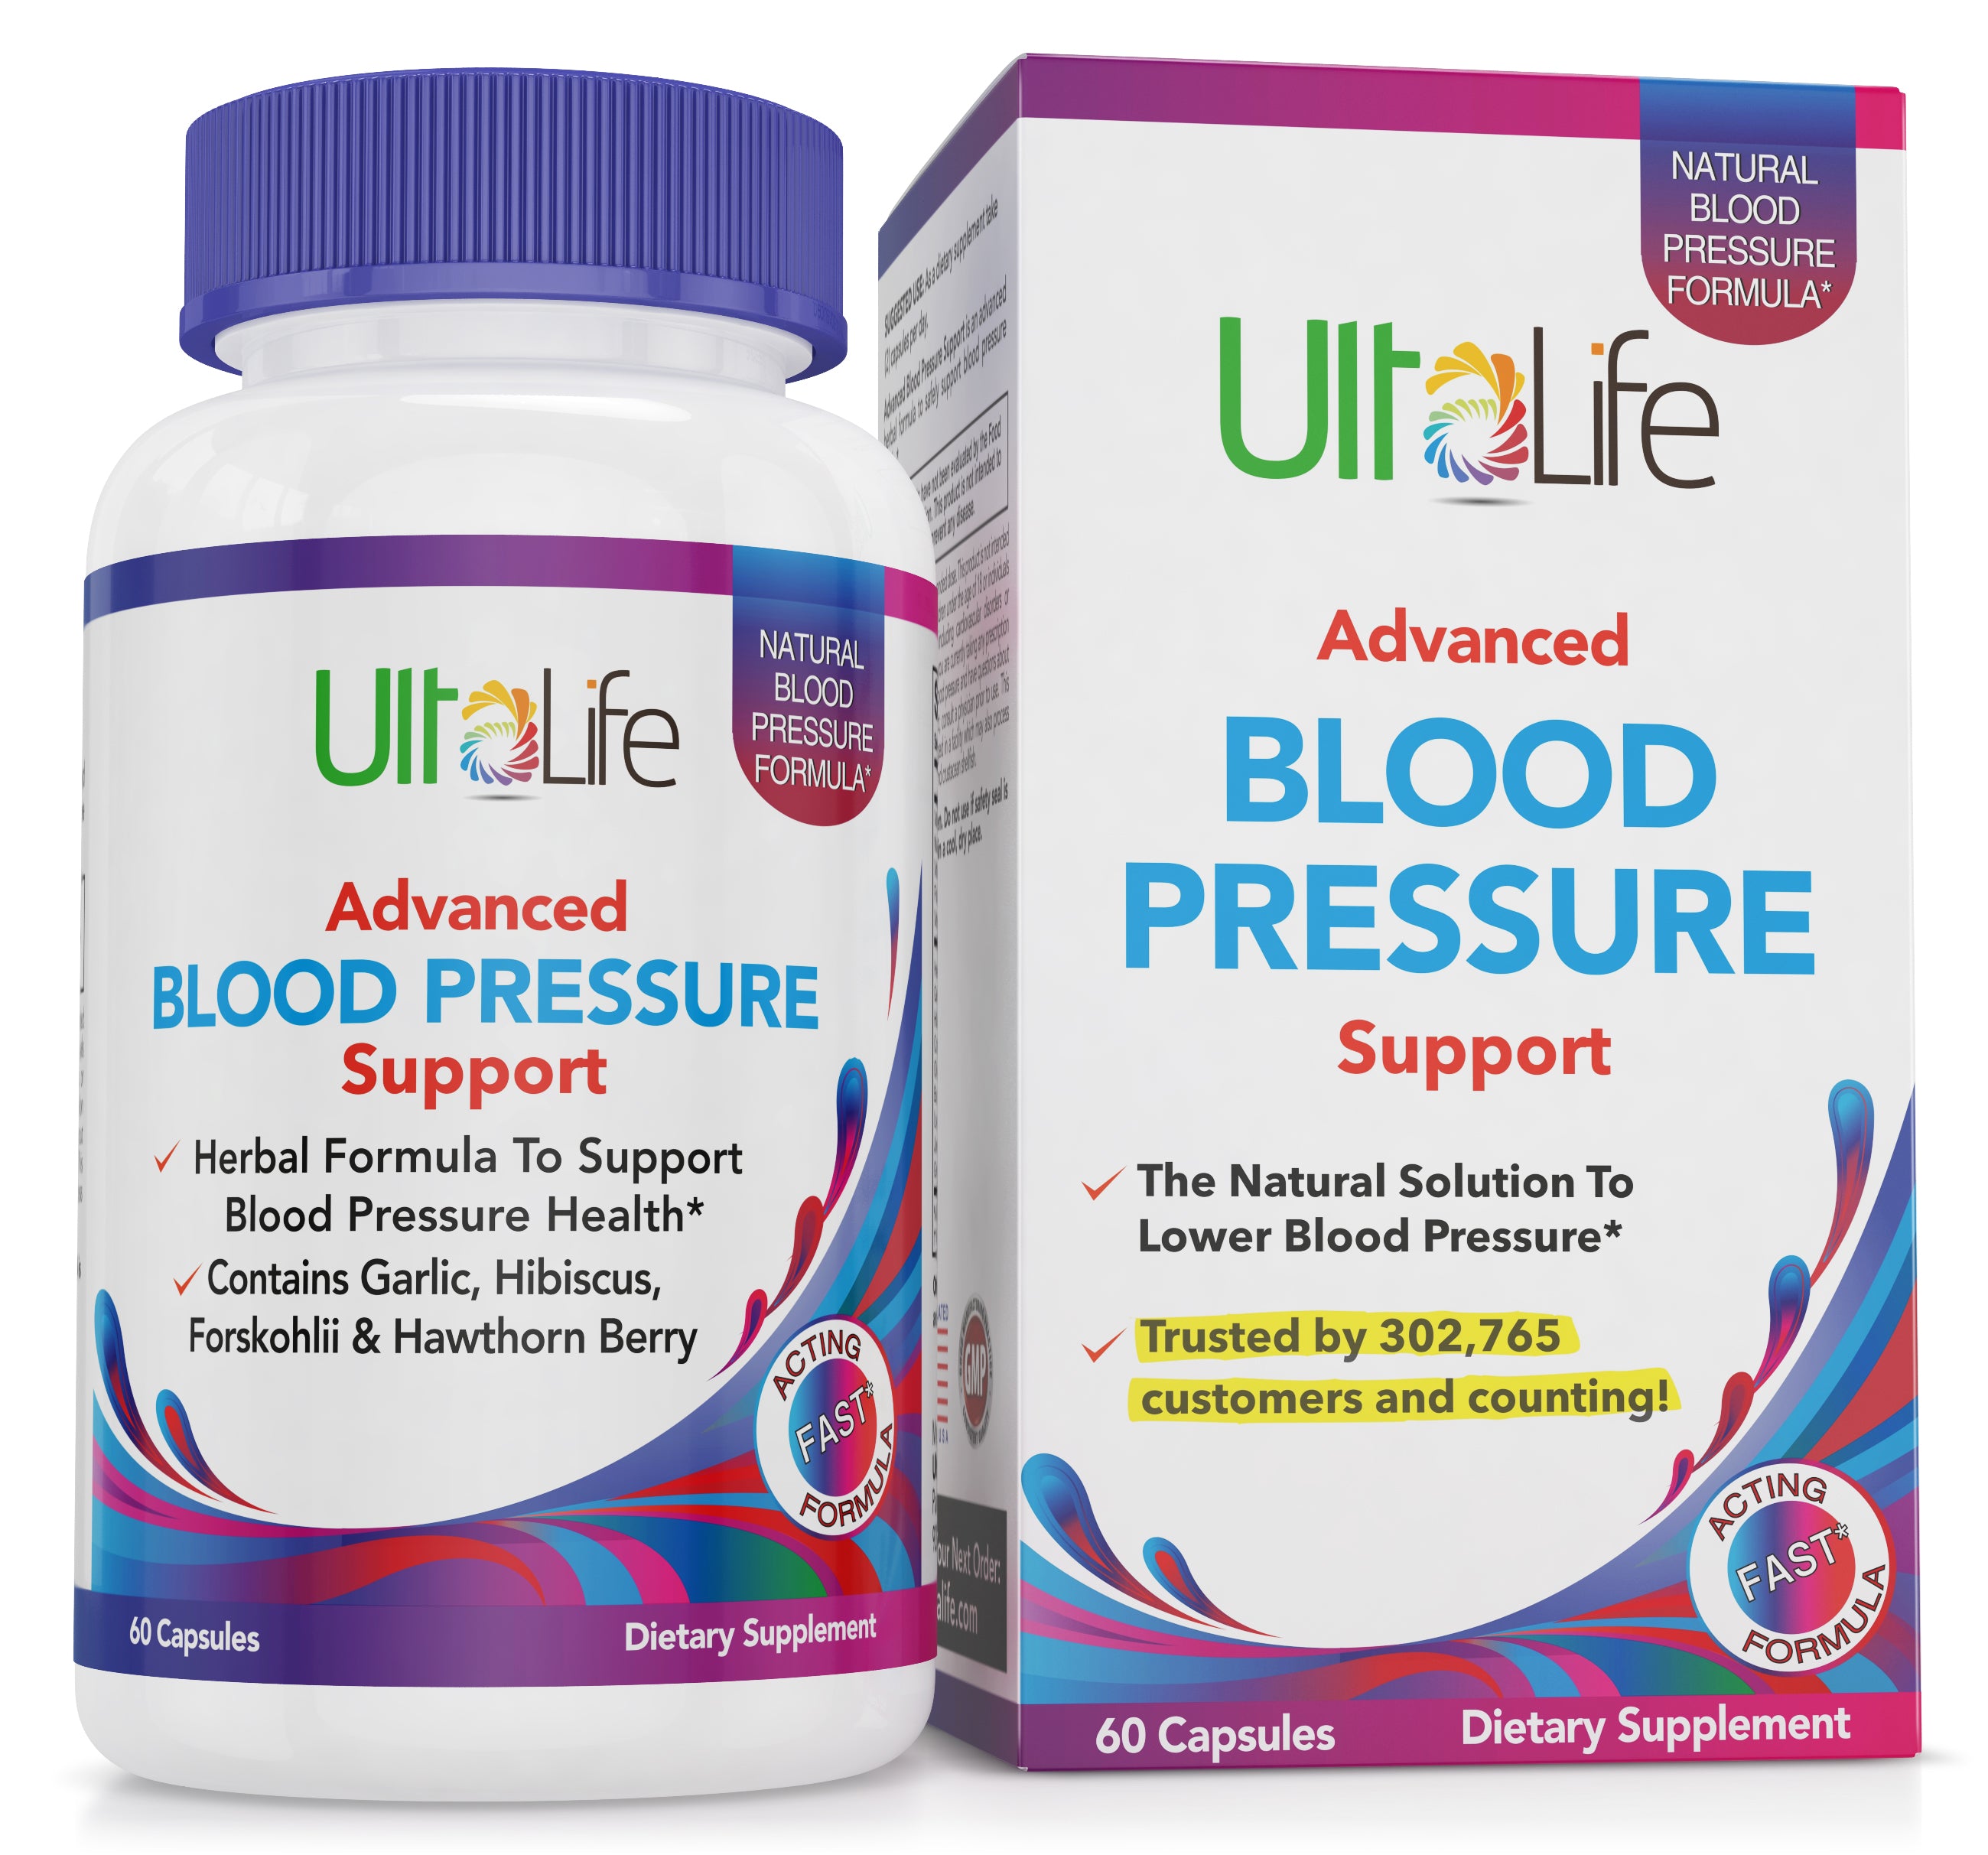 ULTALIFE Advanced Blood Pressure Supplement